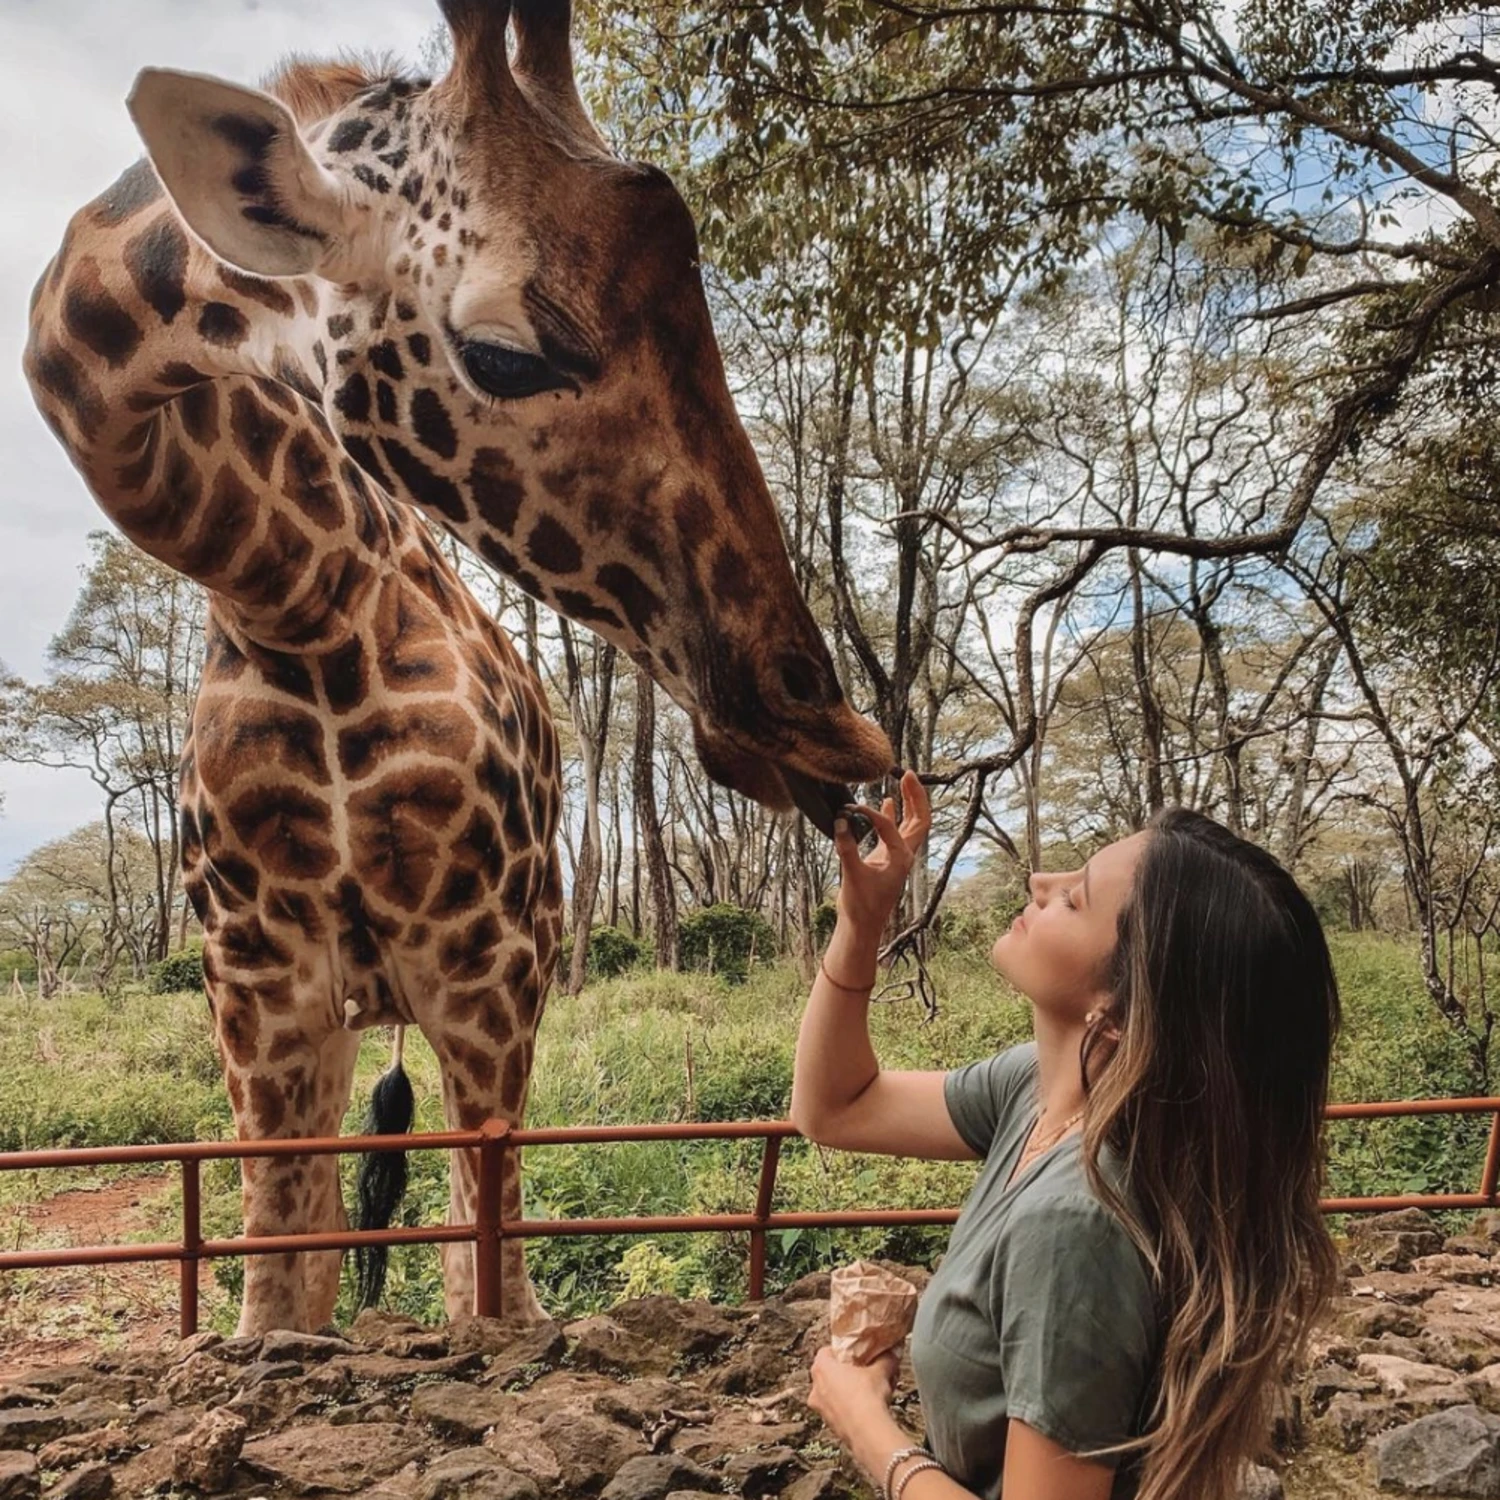 Travel advisor posing with a giraffe